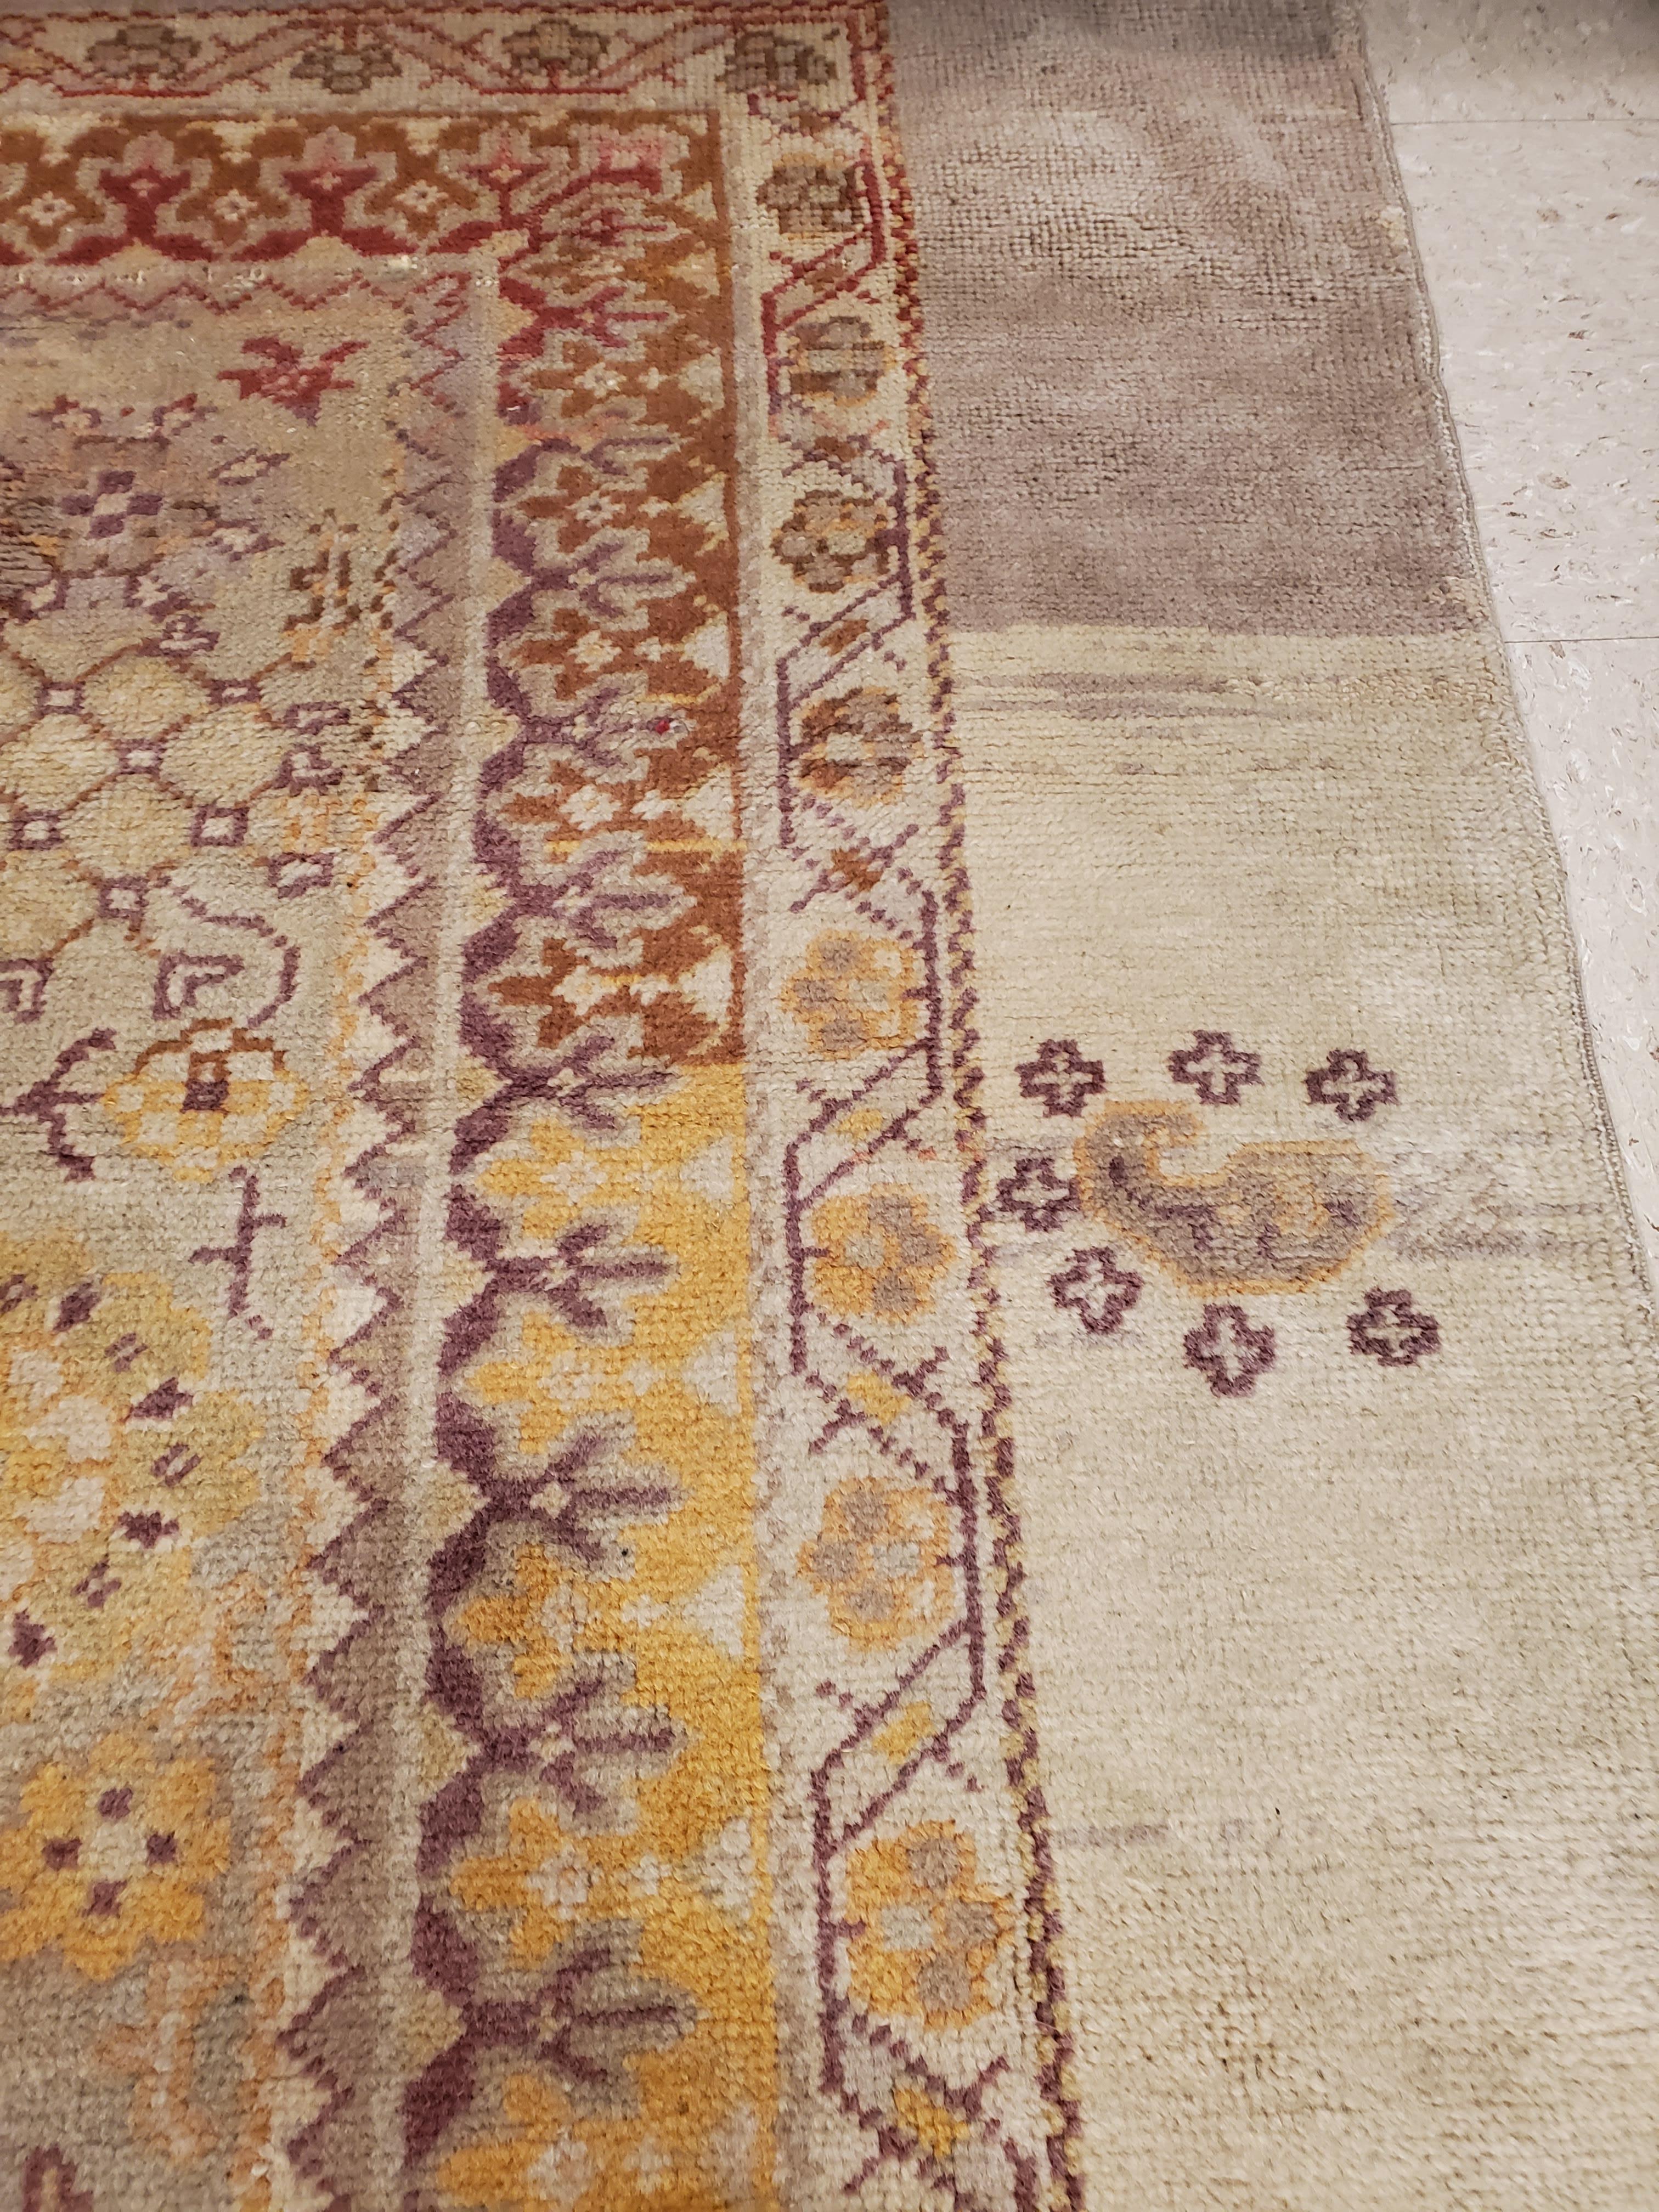 Antique Turkish Oushak Carpet, Handmade Oriental Rug, Gray, Taupe, Saffron Coral 6